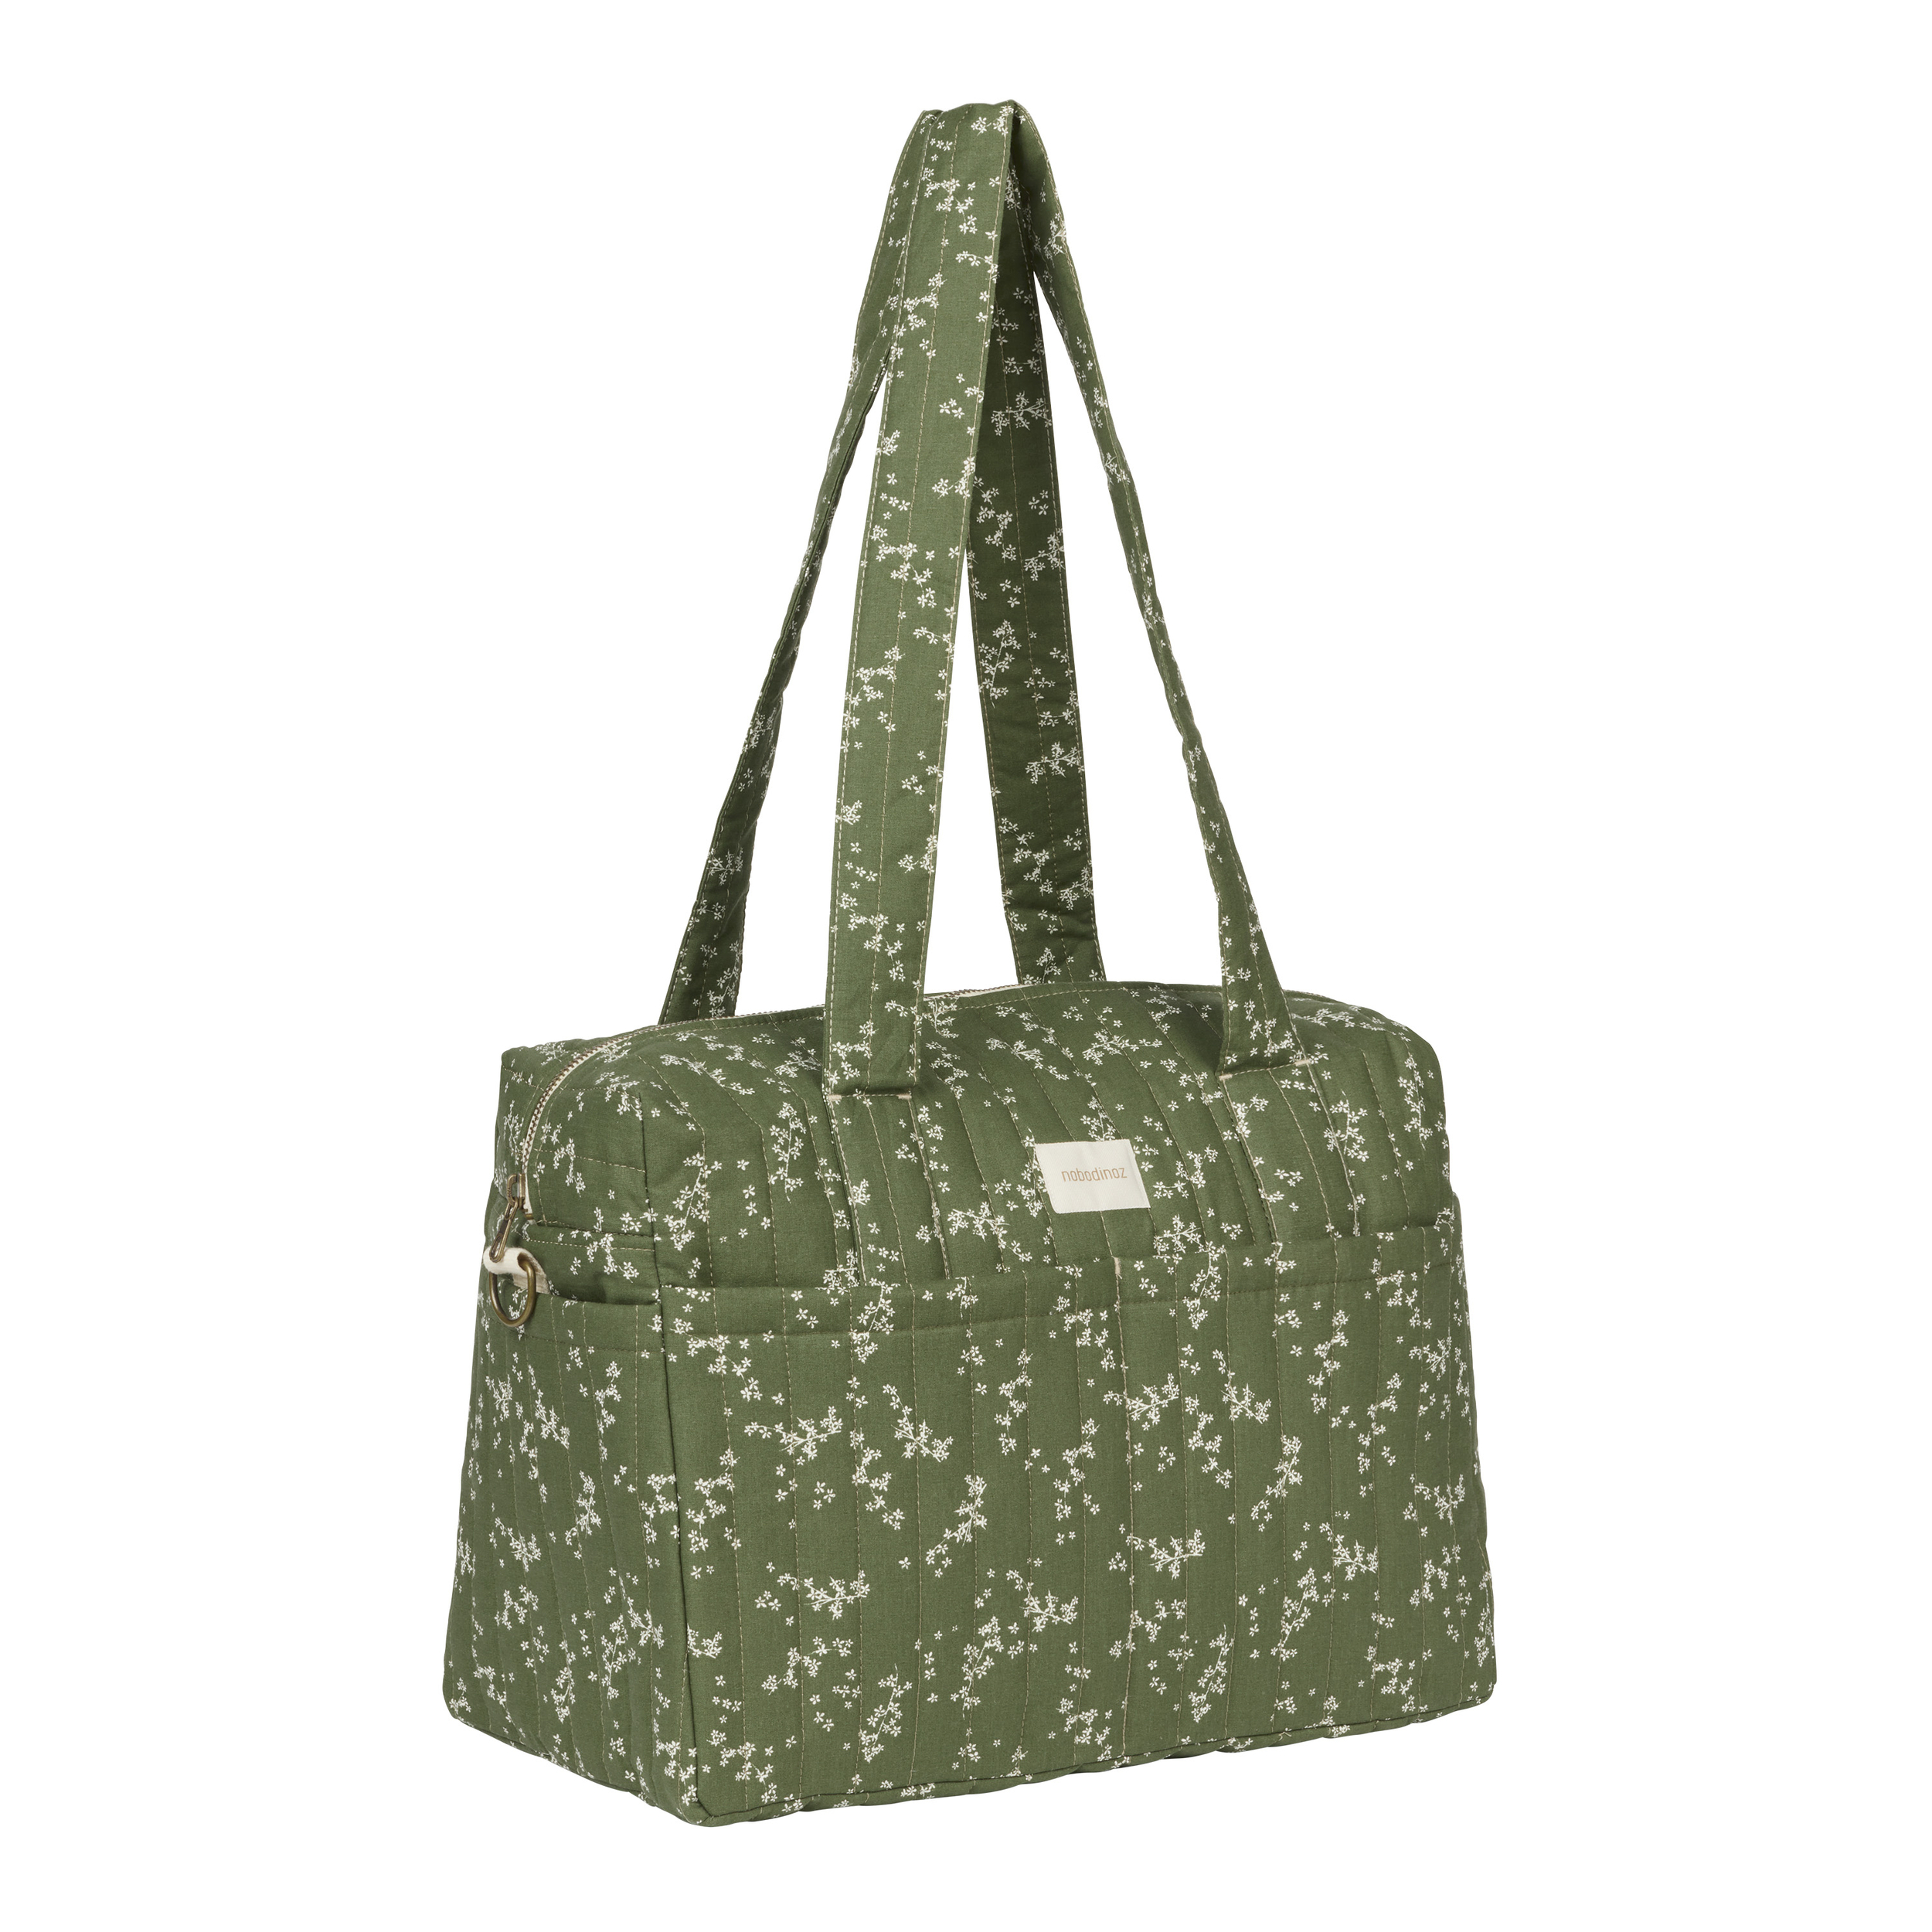 Stories-stroller-bag-green-jasmine-nobodinoz-3-8435574930972